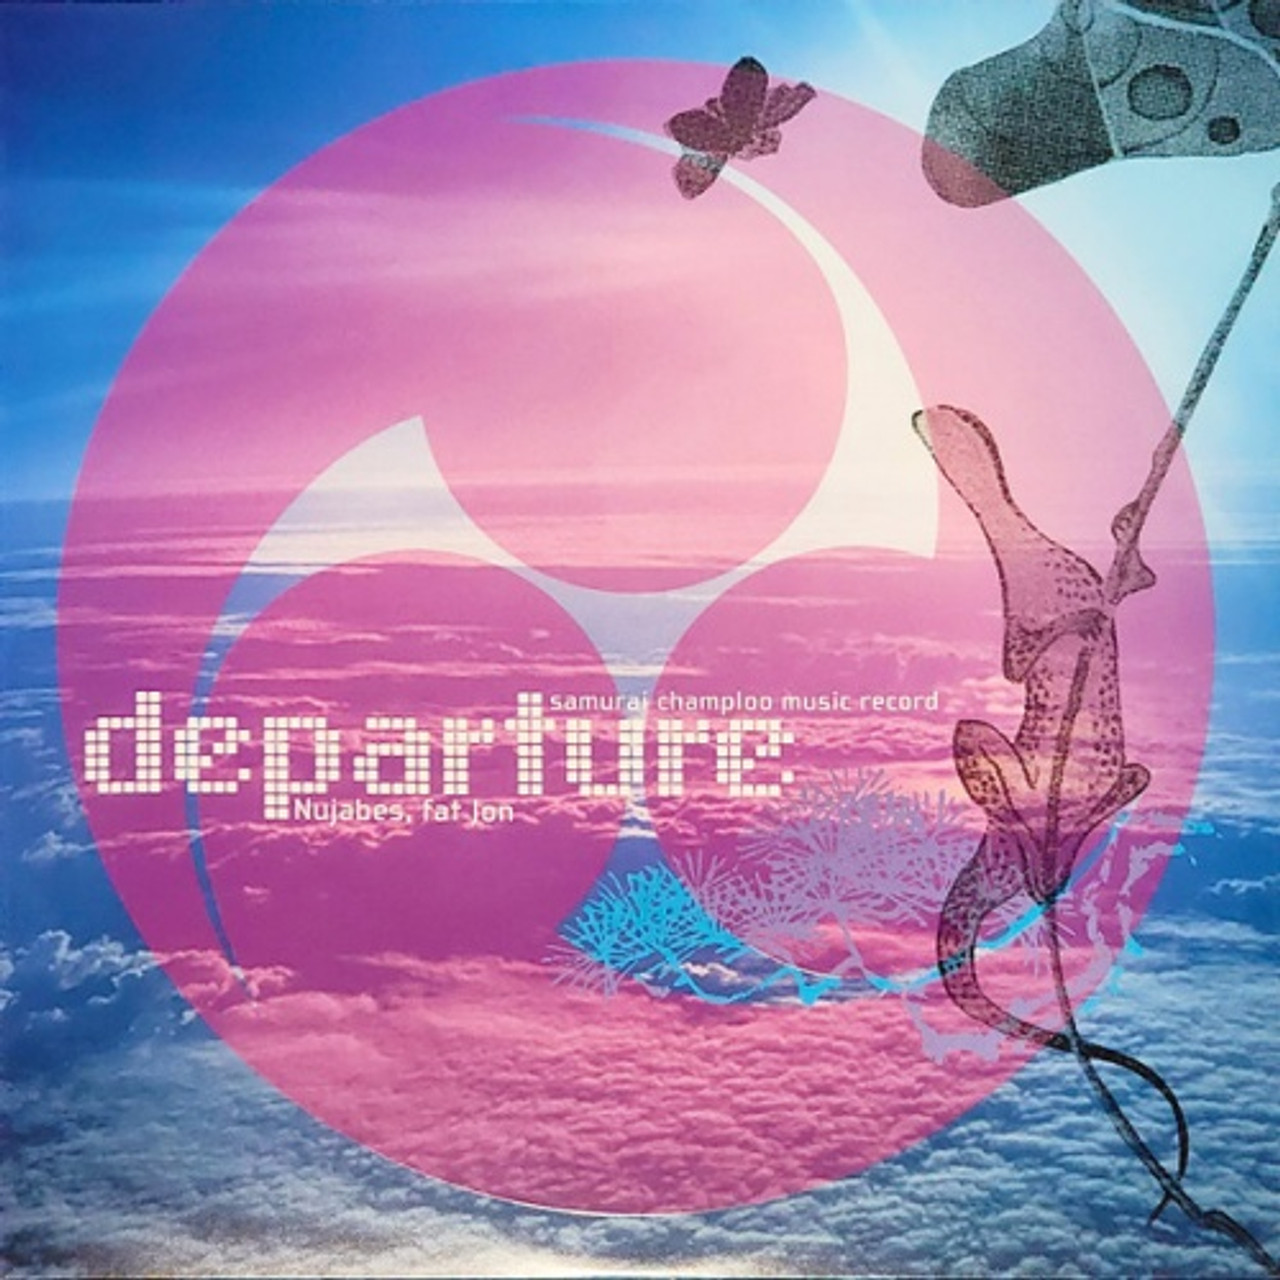 Nujabes / Fat Jon - Samurai Champloo Music Record - Departure - 2x